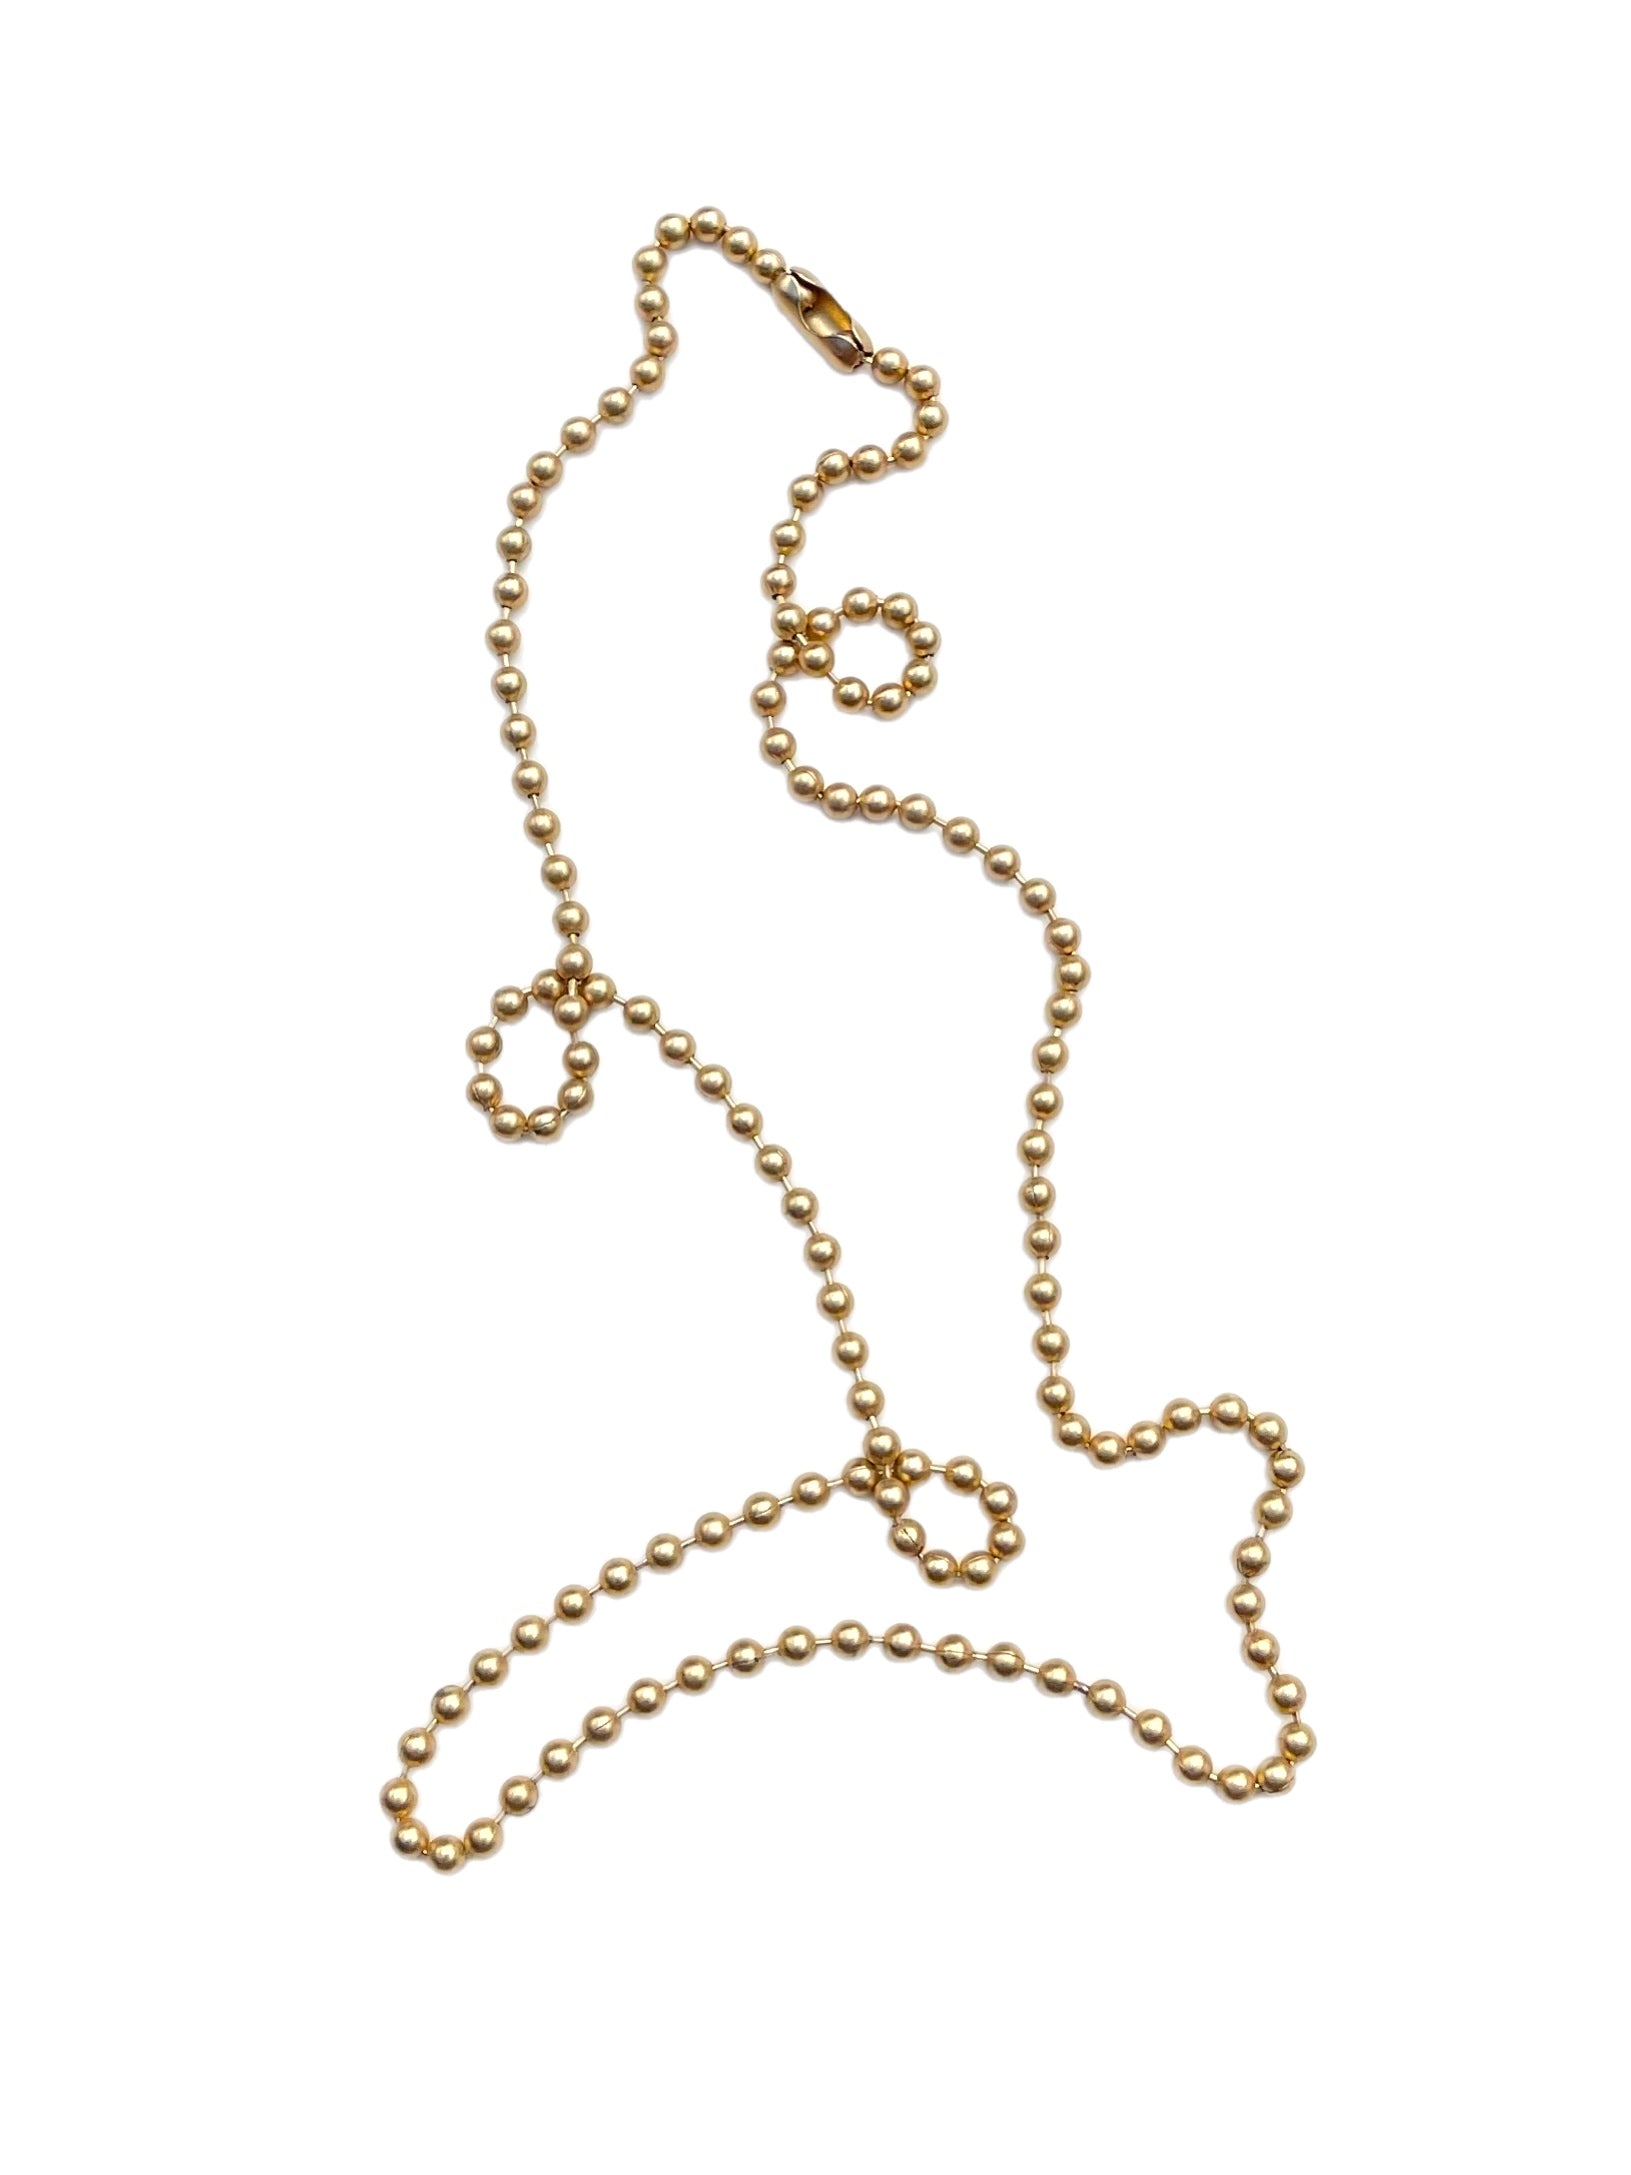 Bliss B/N - matte gold bead necklace or wrap bracelet